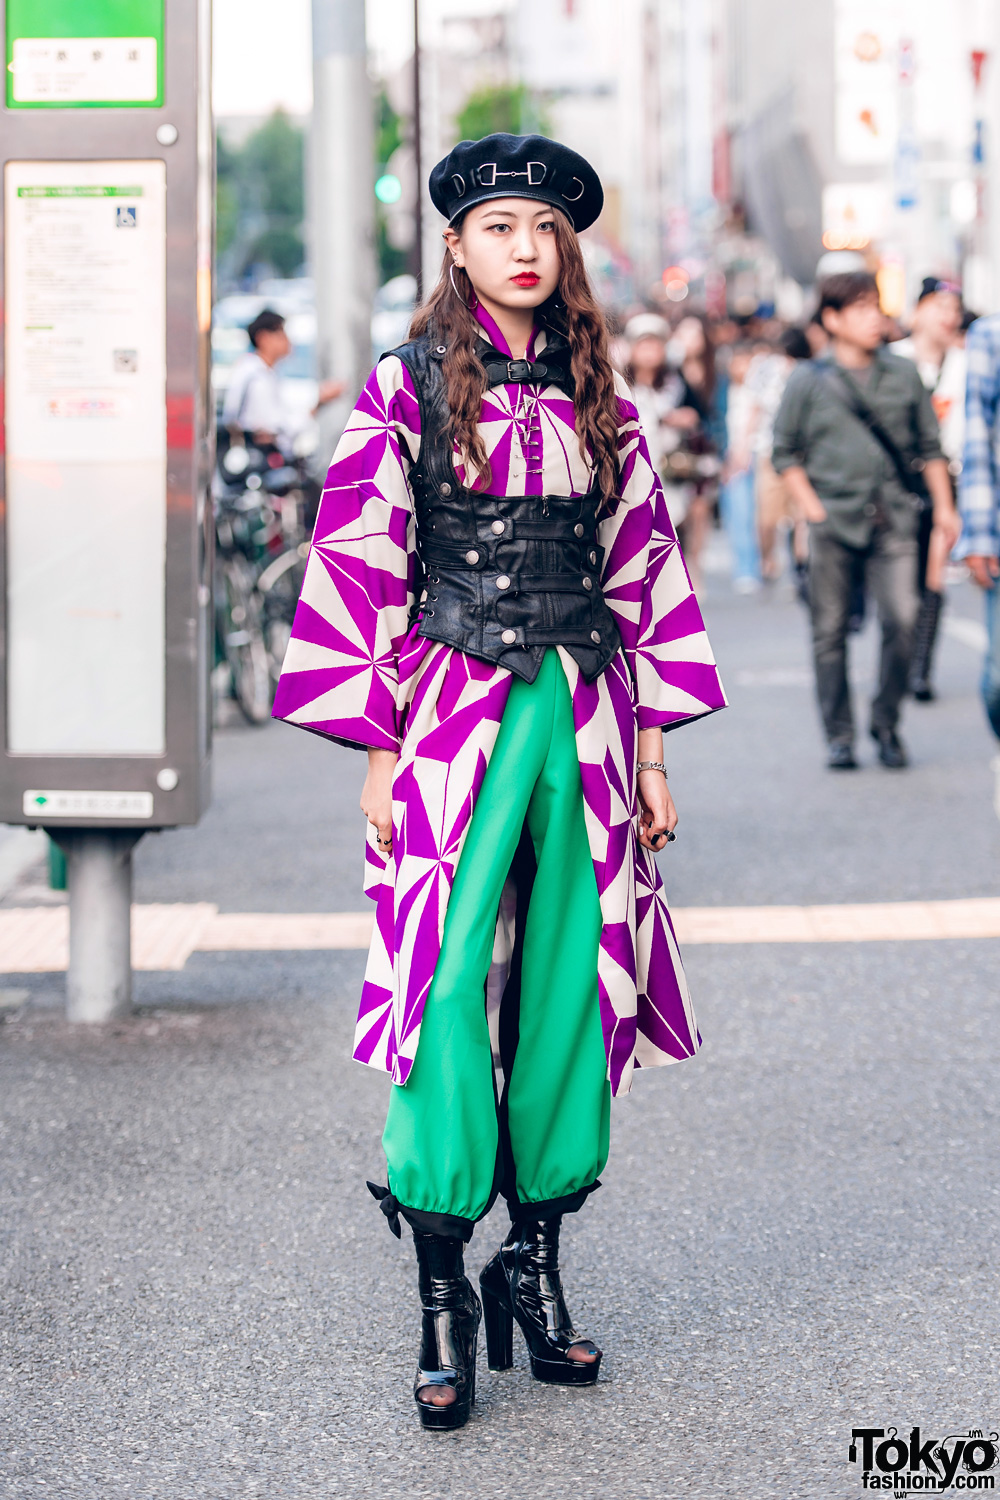 Harajuku Girl in Vintage & Black Leather Street Fashion